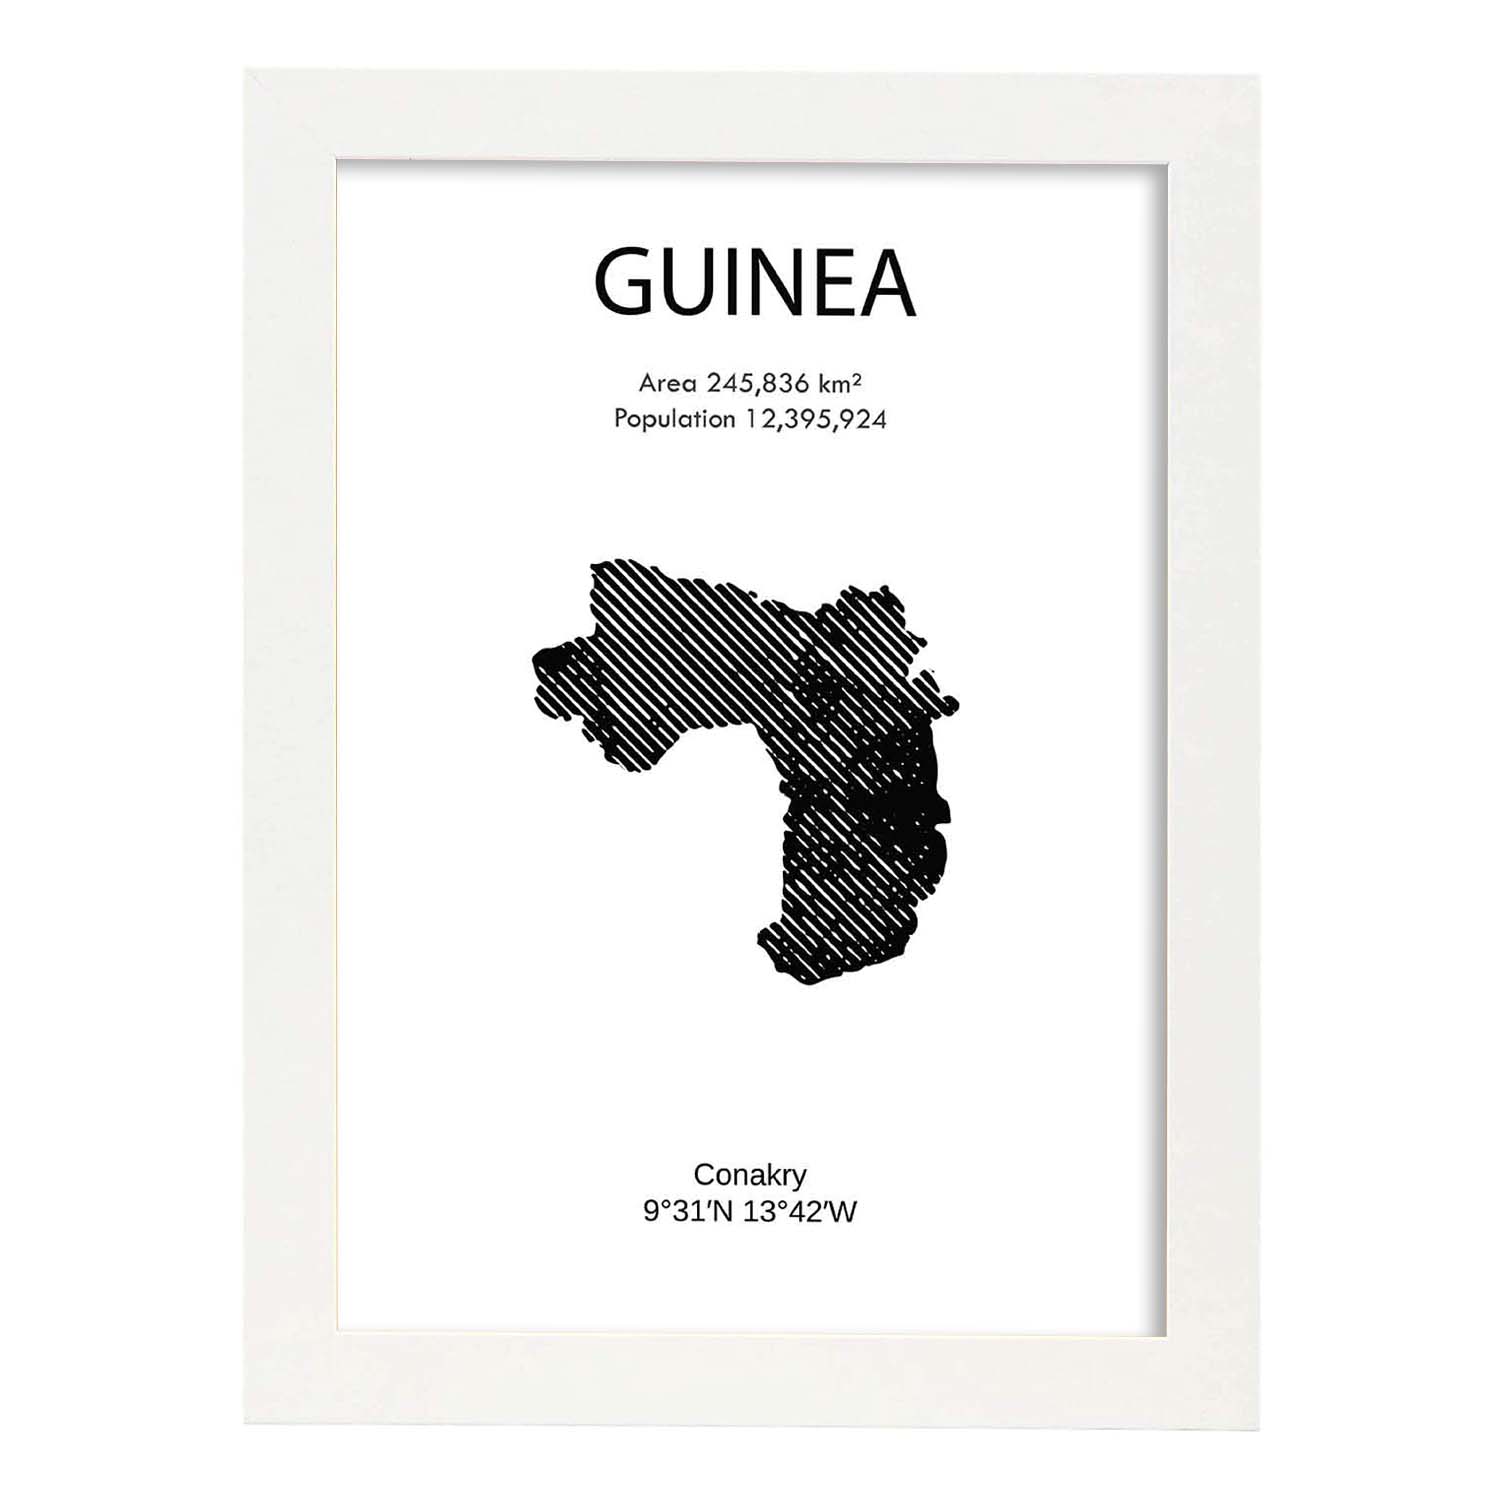 Poster de Guinea. Láminas de paises y continentes del mundo.-Artwork-Nacnic-A3-Marco Blanco-Nacnic Estudio SL